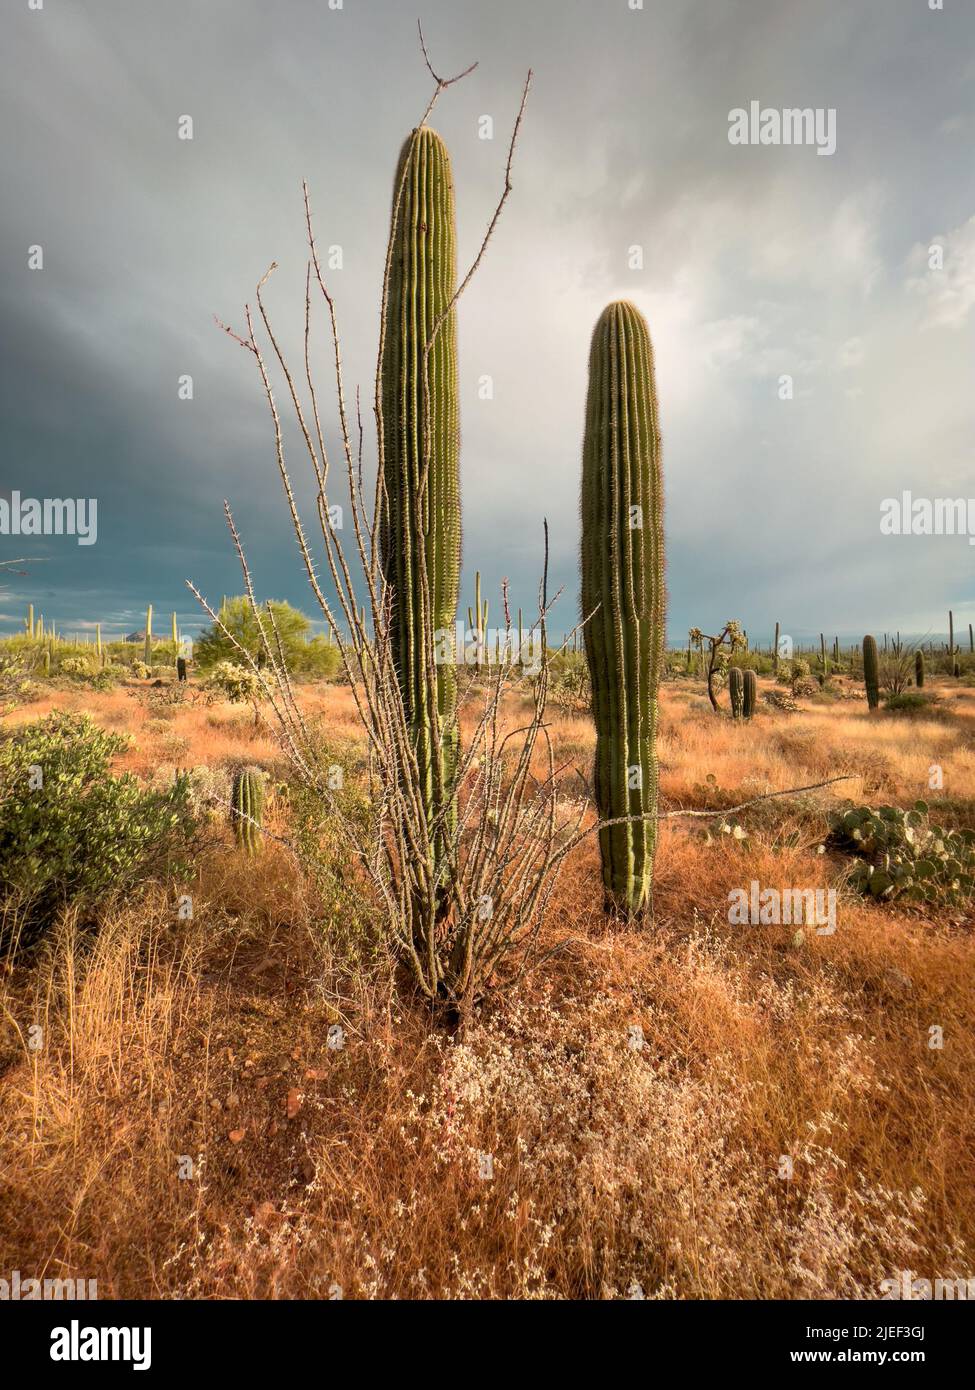 Zwei saguaro-Kakteen in trockener, trockener Arizona-Landschaft Stockfoto